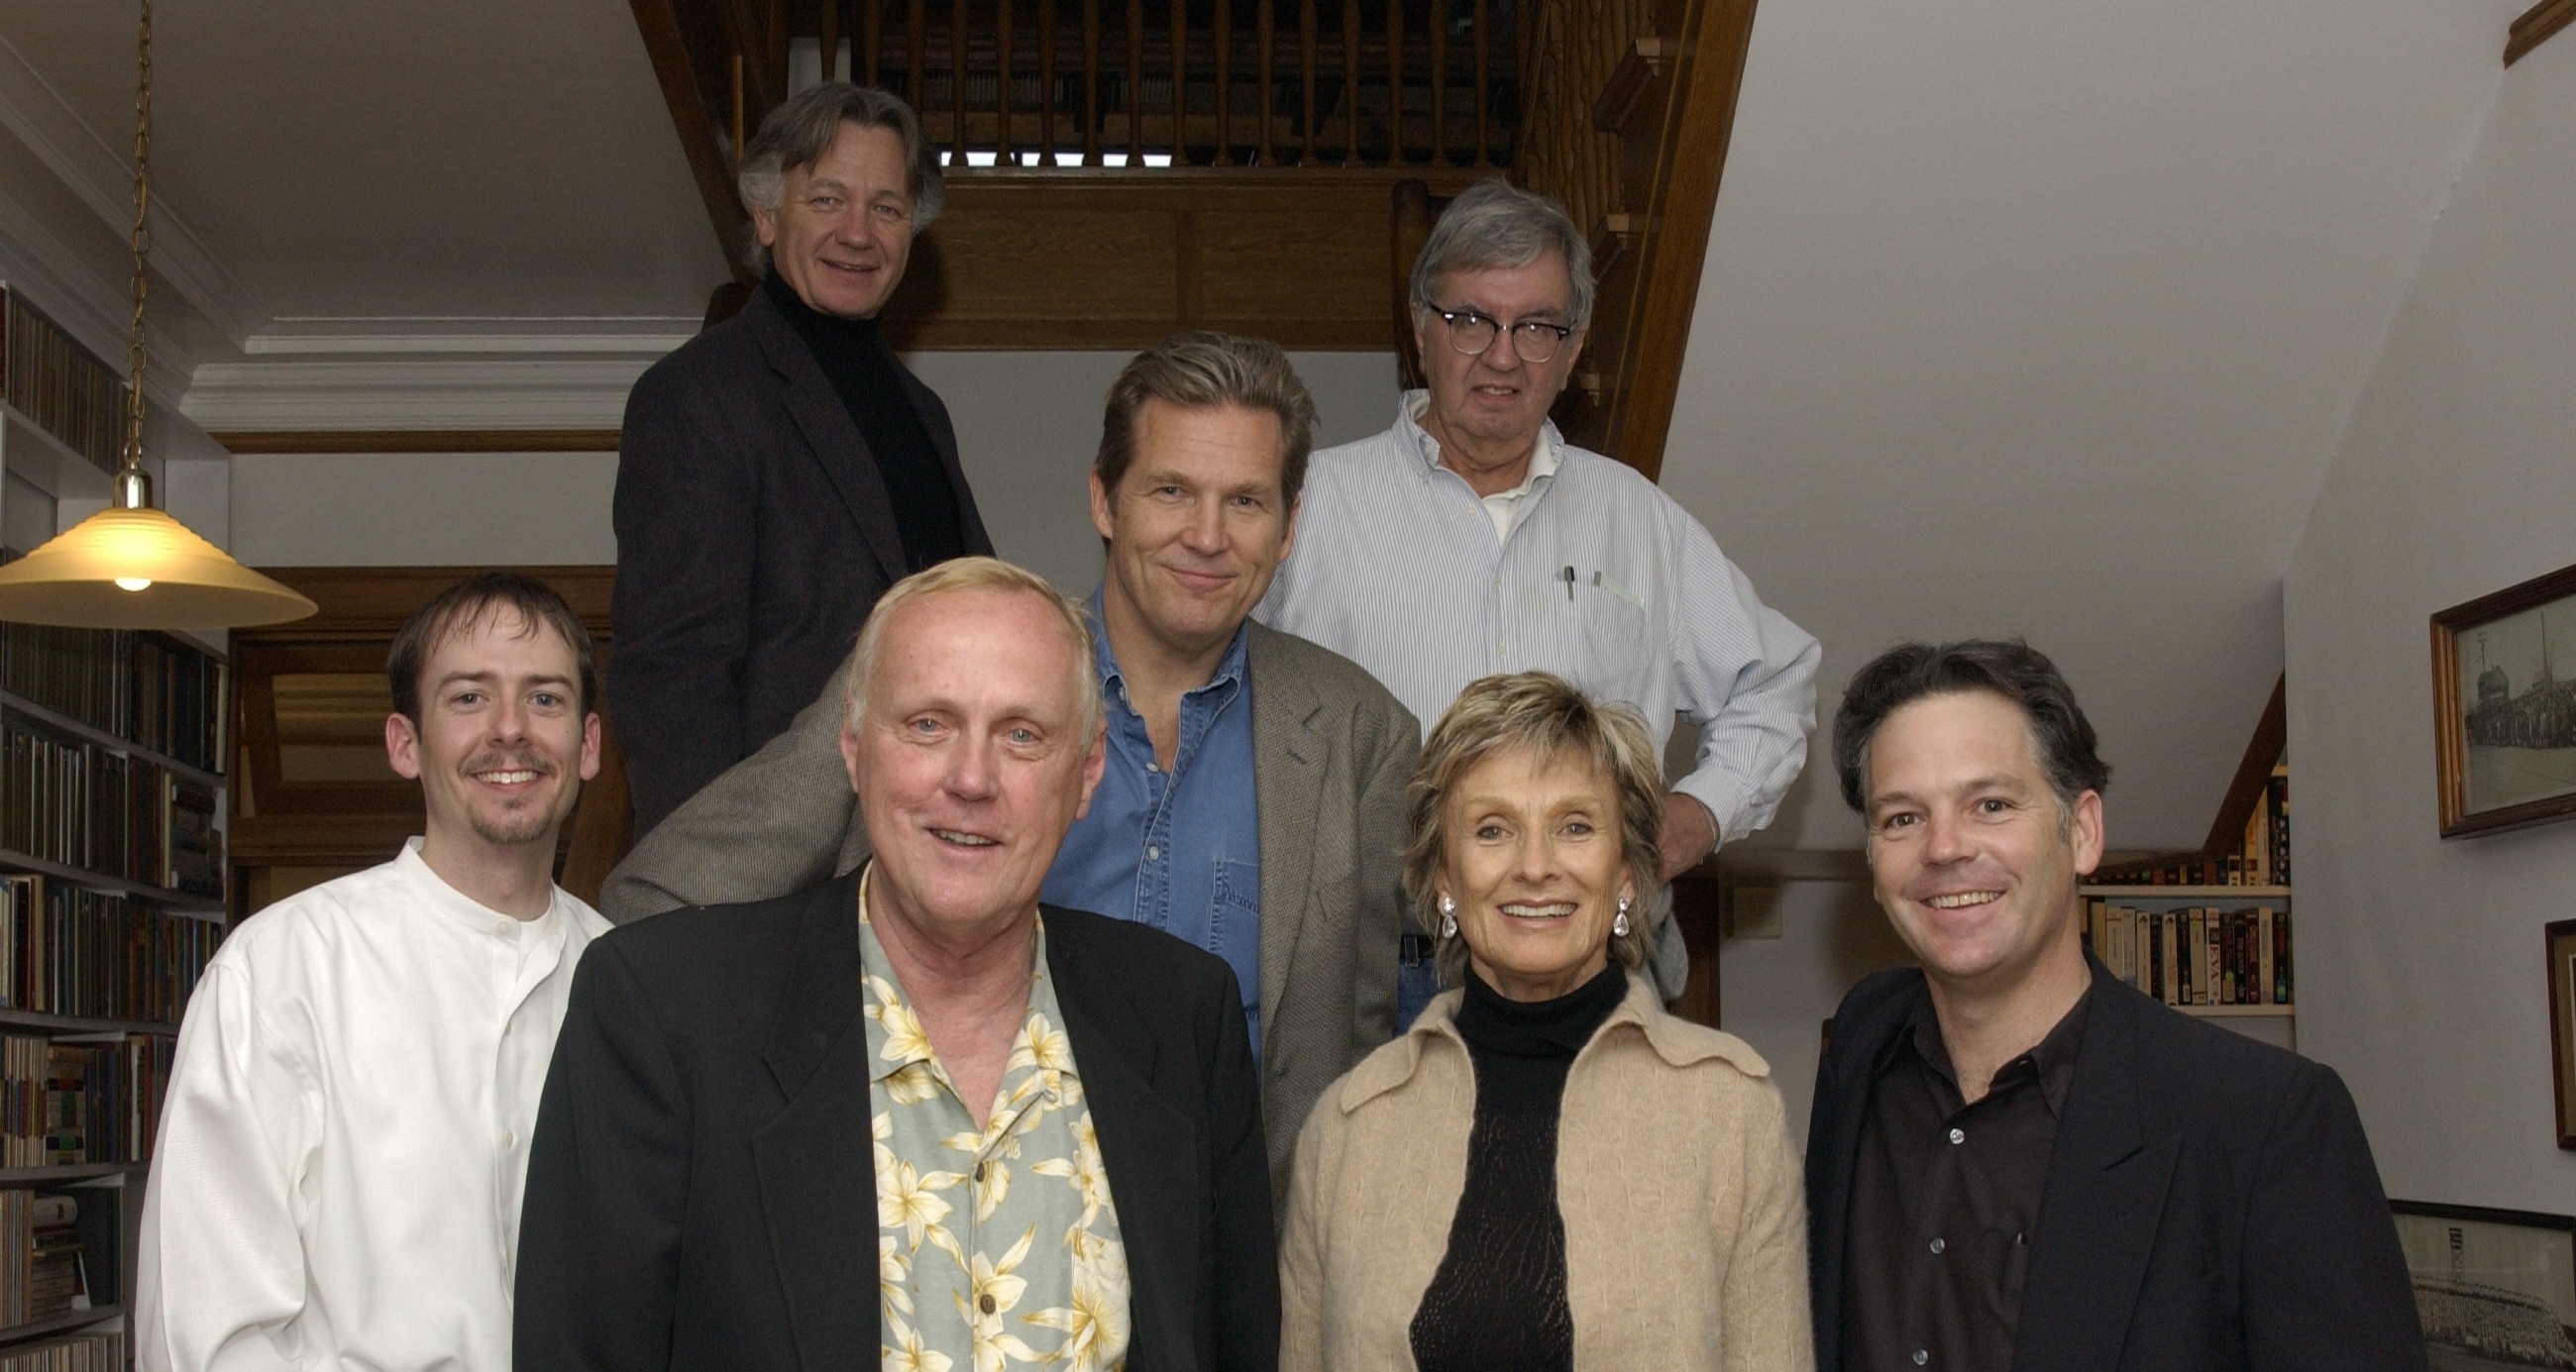 John Muzyka, Don Graham, Cloris Leachman, Abby Abernathy, Jeff Bridges, Larry McMurtry and Loyd Catlett during photo shoot at Larry's house in Texas.